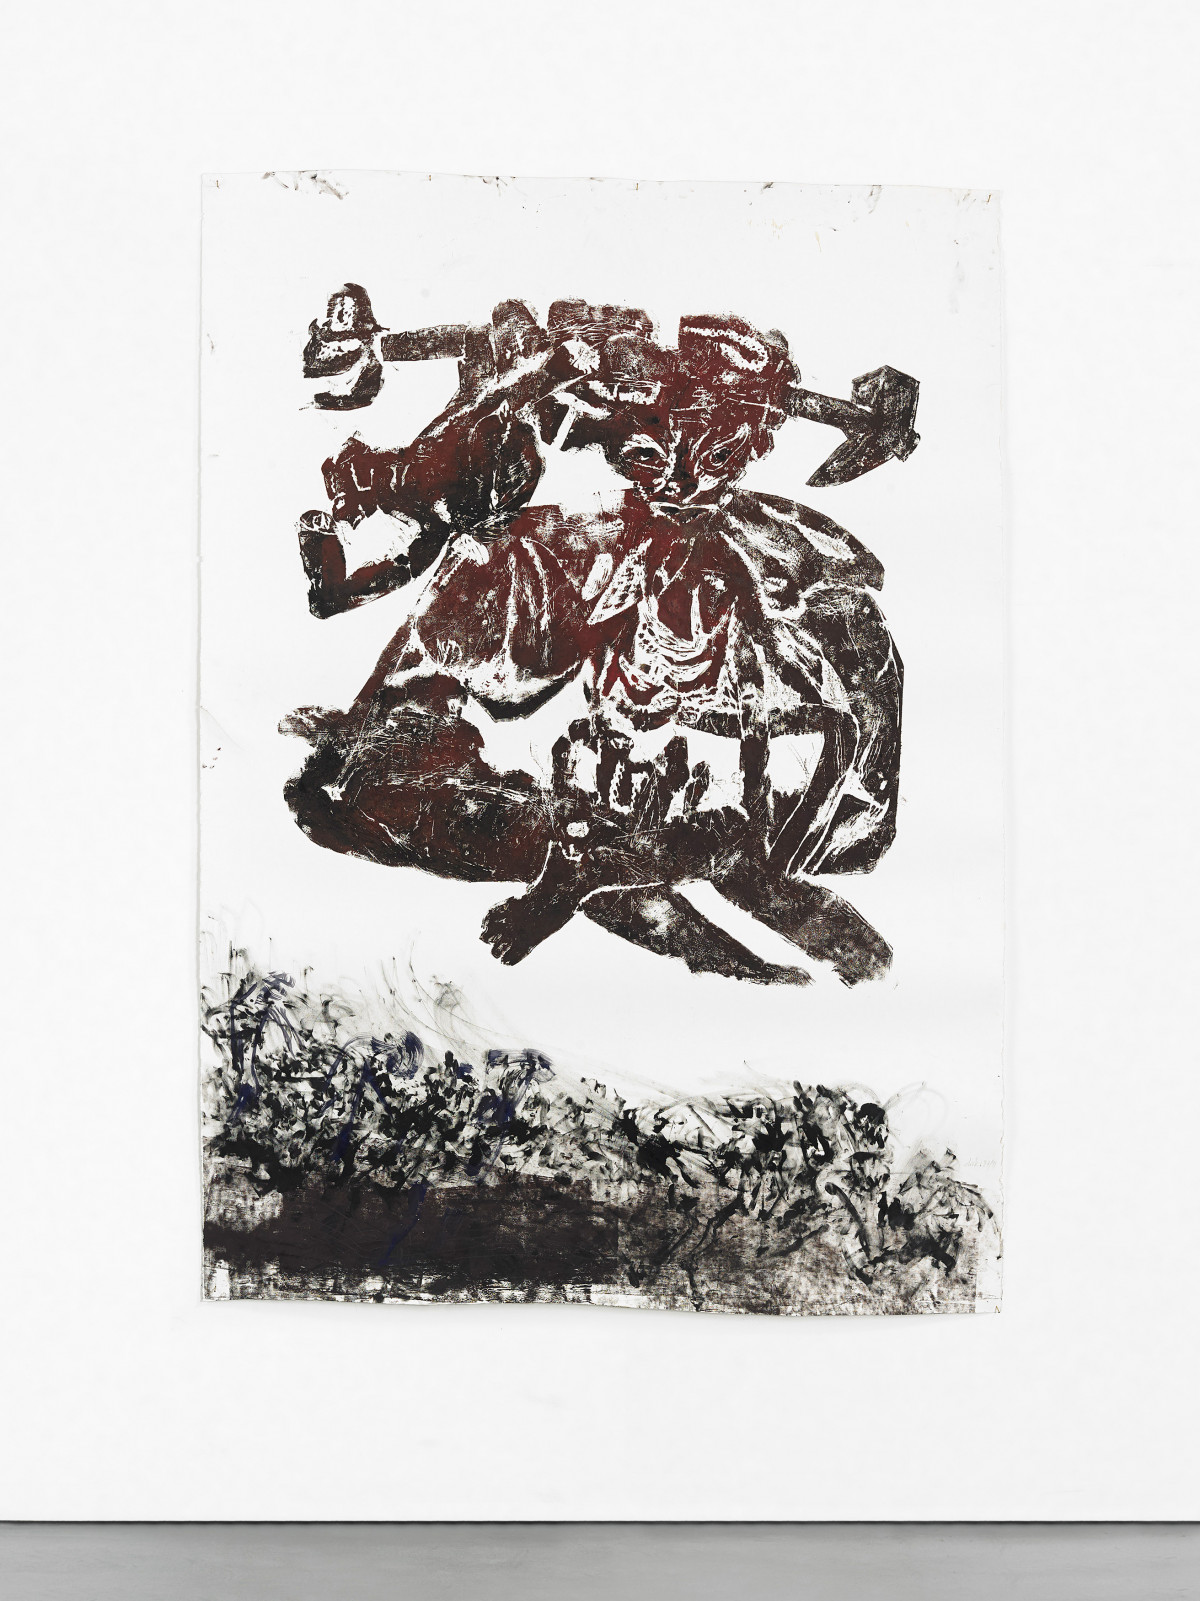 MARTIN_DISLER_Ohne Titel, untitled, 1987, Linolschnitt, Malerei, Papier, linocut, large, 220x154 cm